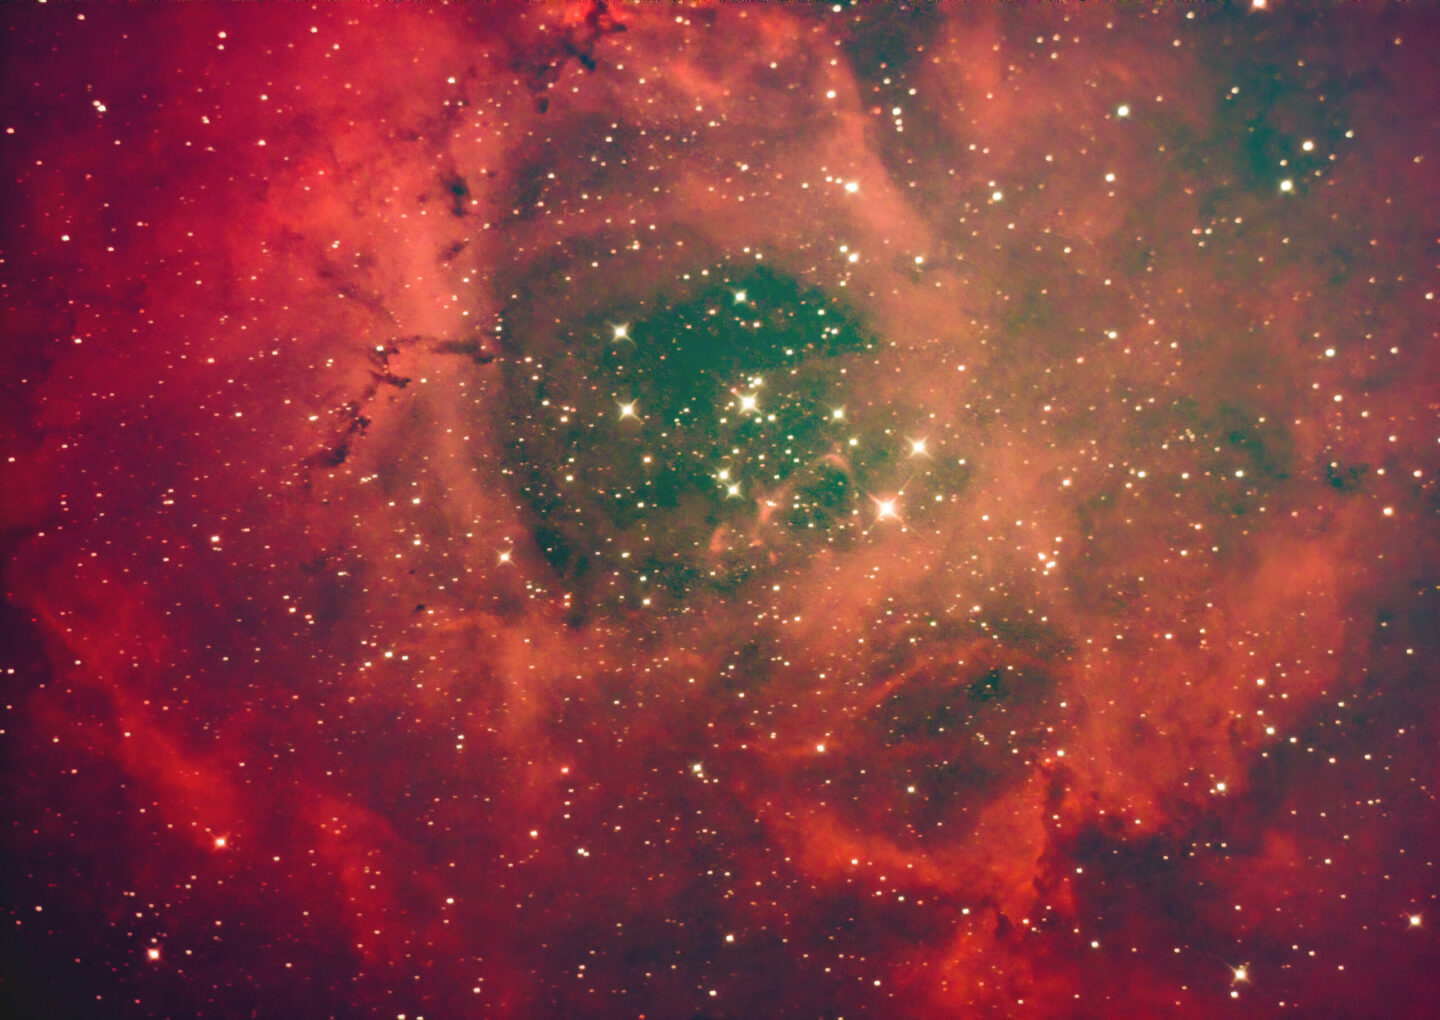 Rosette Nebula core by Anthony Holloway